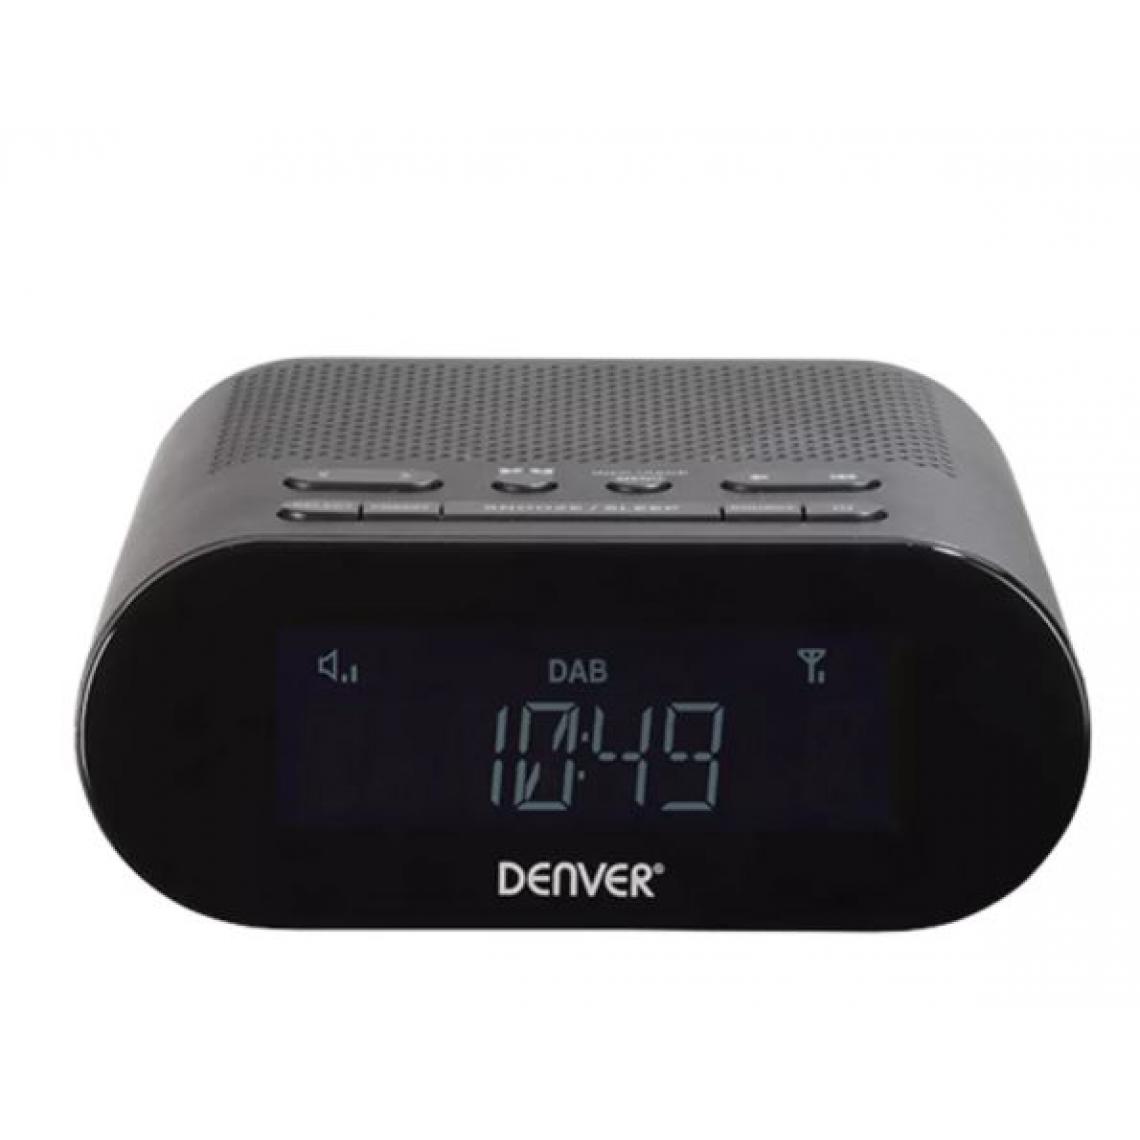 Denver - Denver dab+ clock radio CRD505 - Radio